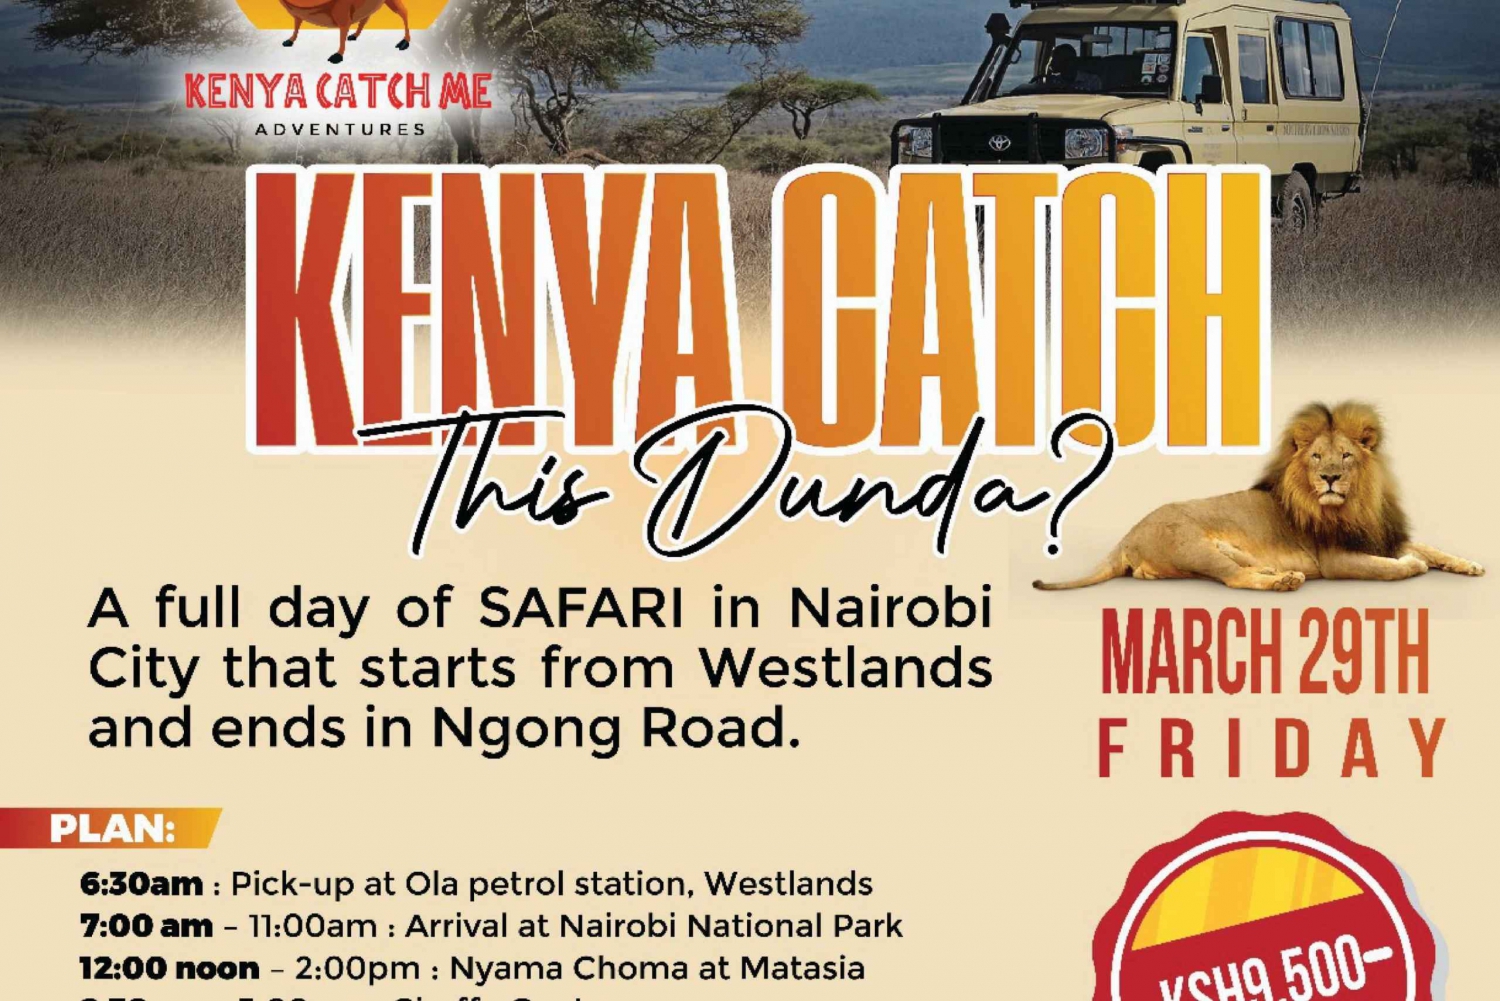 Nairobi : Quênia Catch This Dunda?